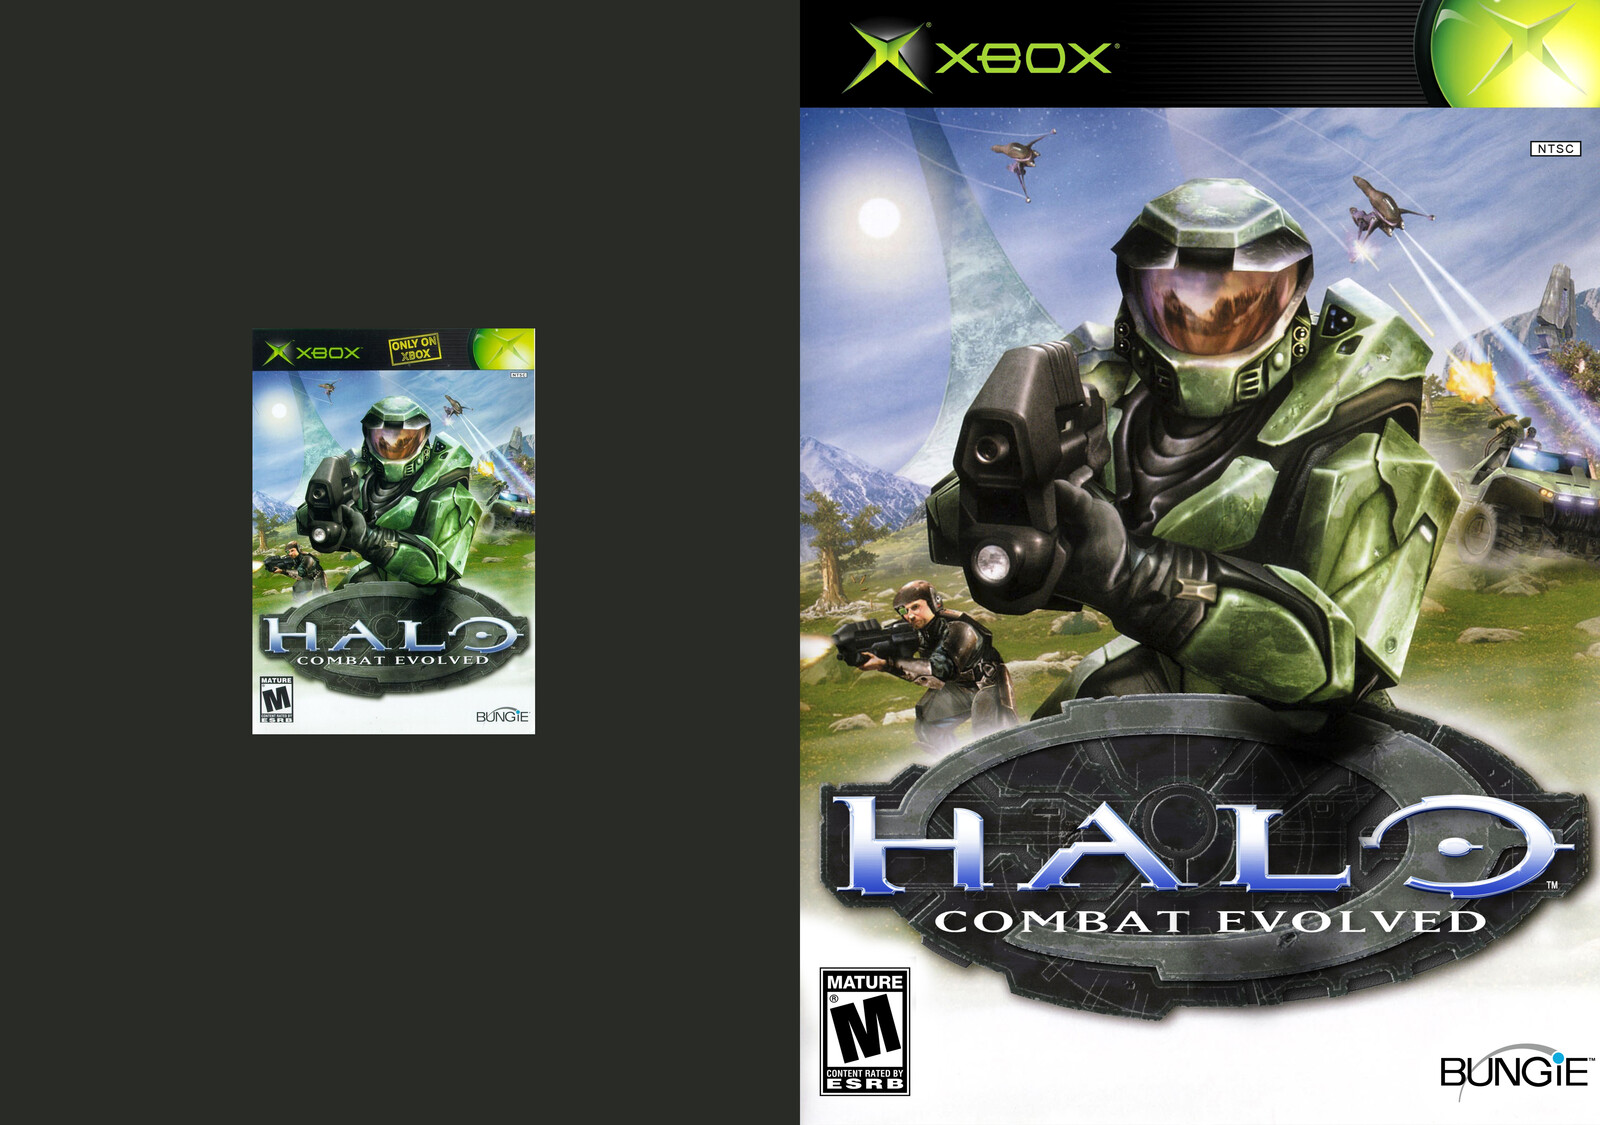 Halo: Combat Evolved (original scan cover vs. upscaled)